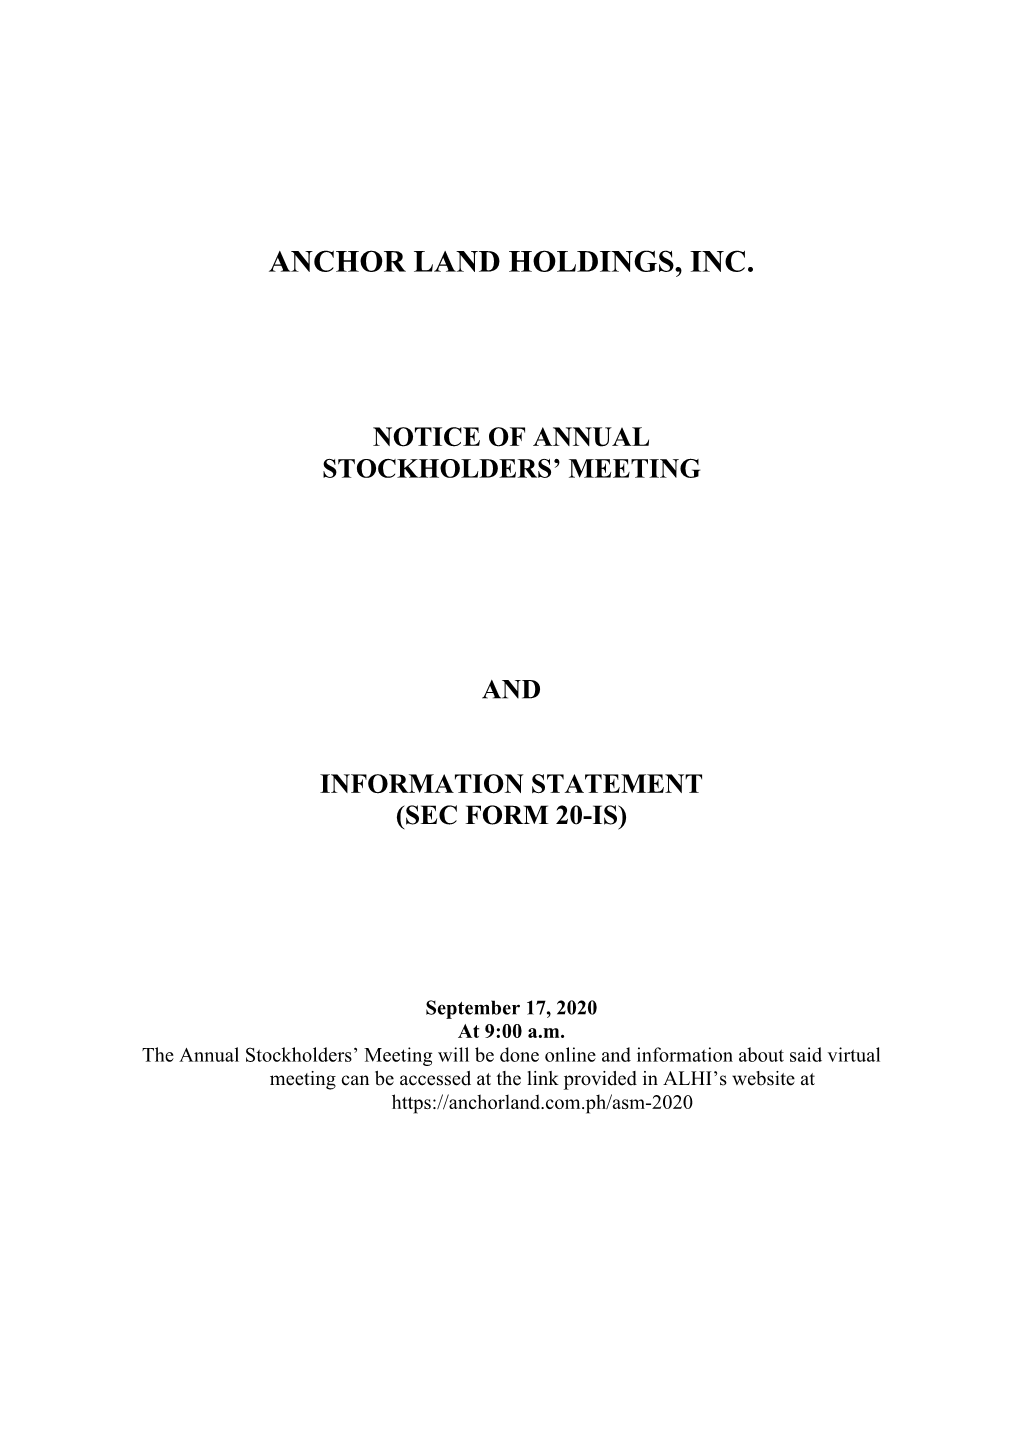 Anchor Land Holdings, Inc